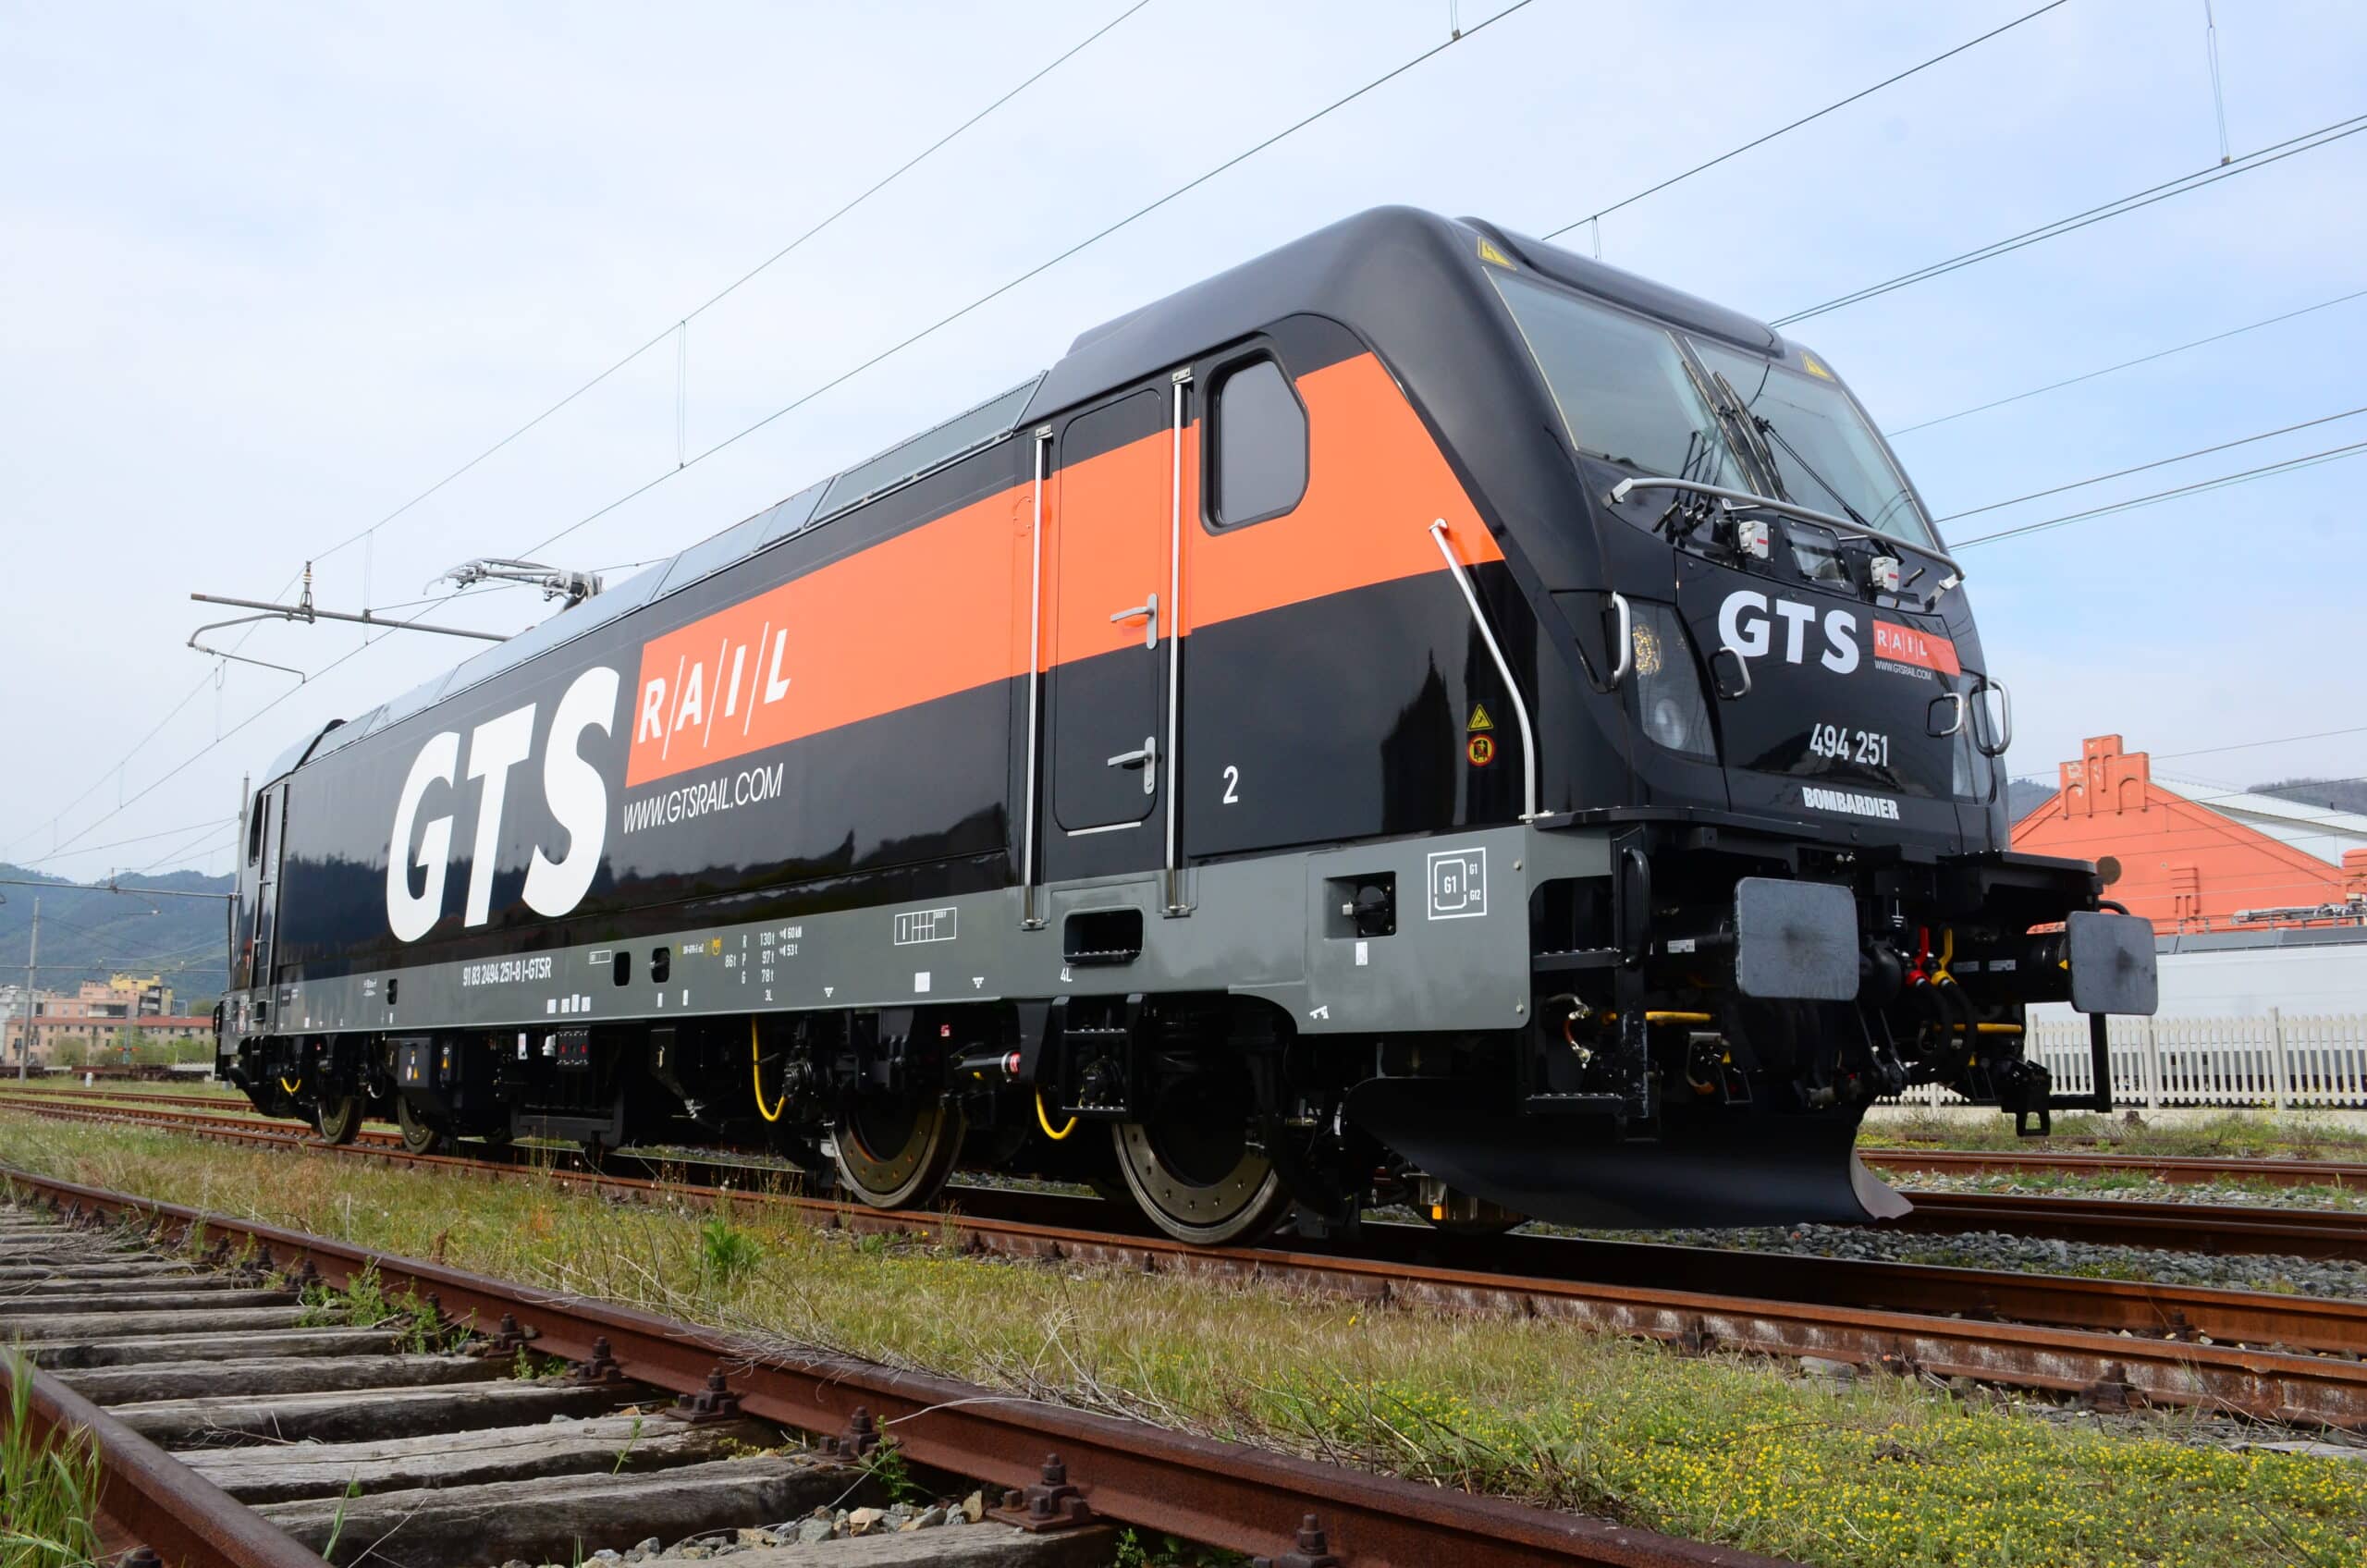 GTS locomotive bombardier